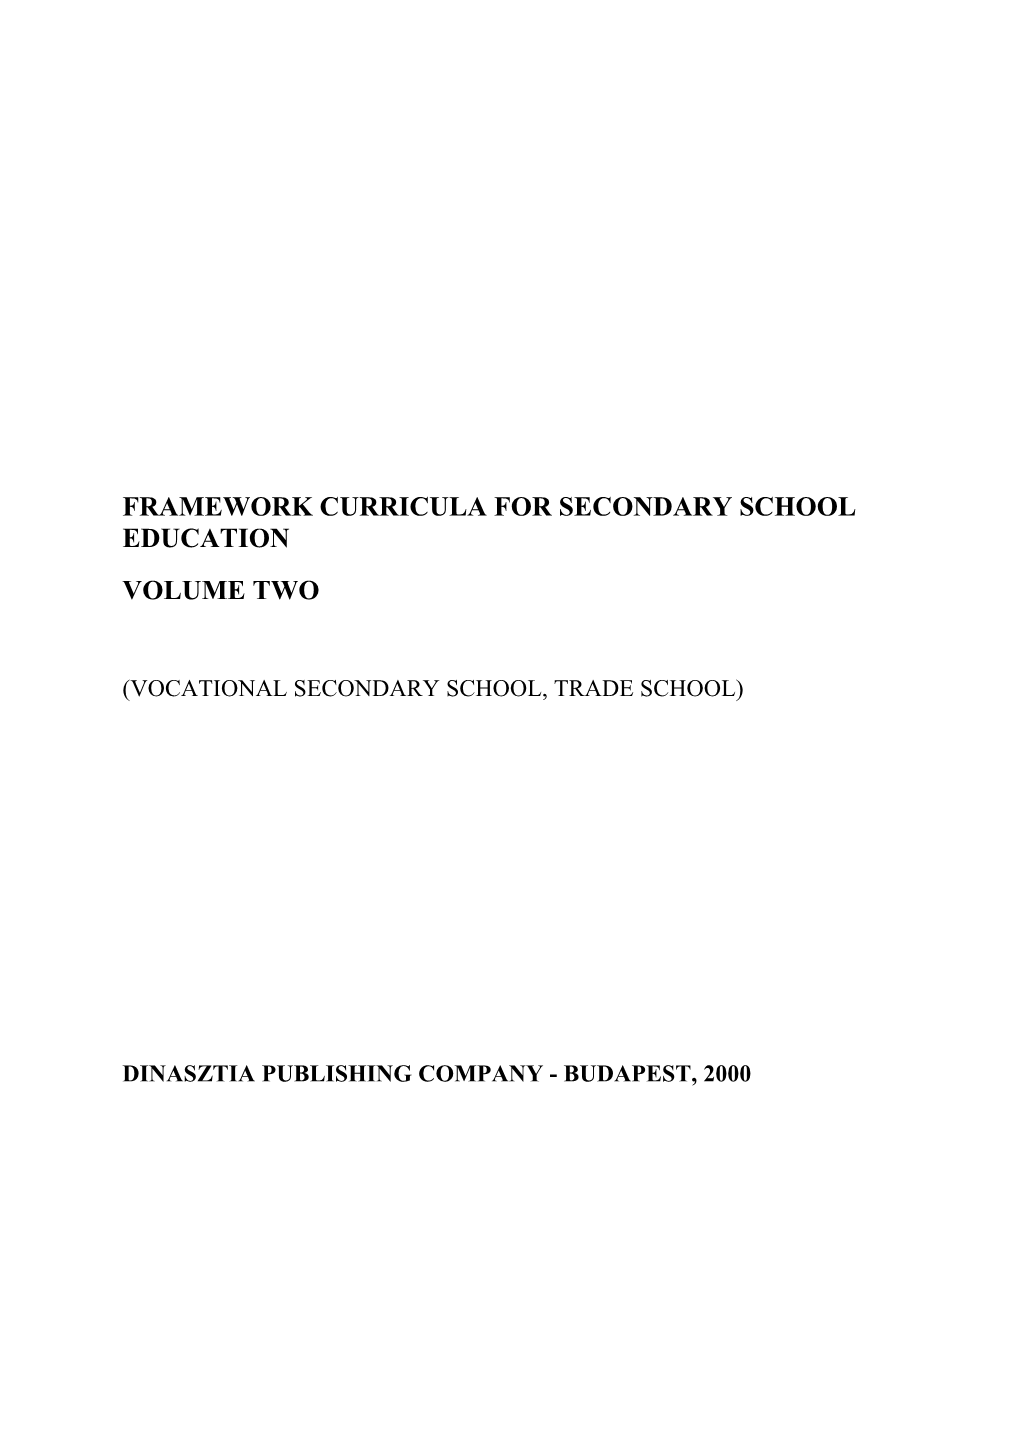 Framework Curricula for Secondary School Education